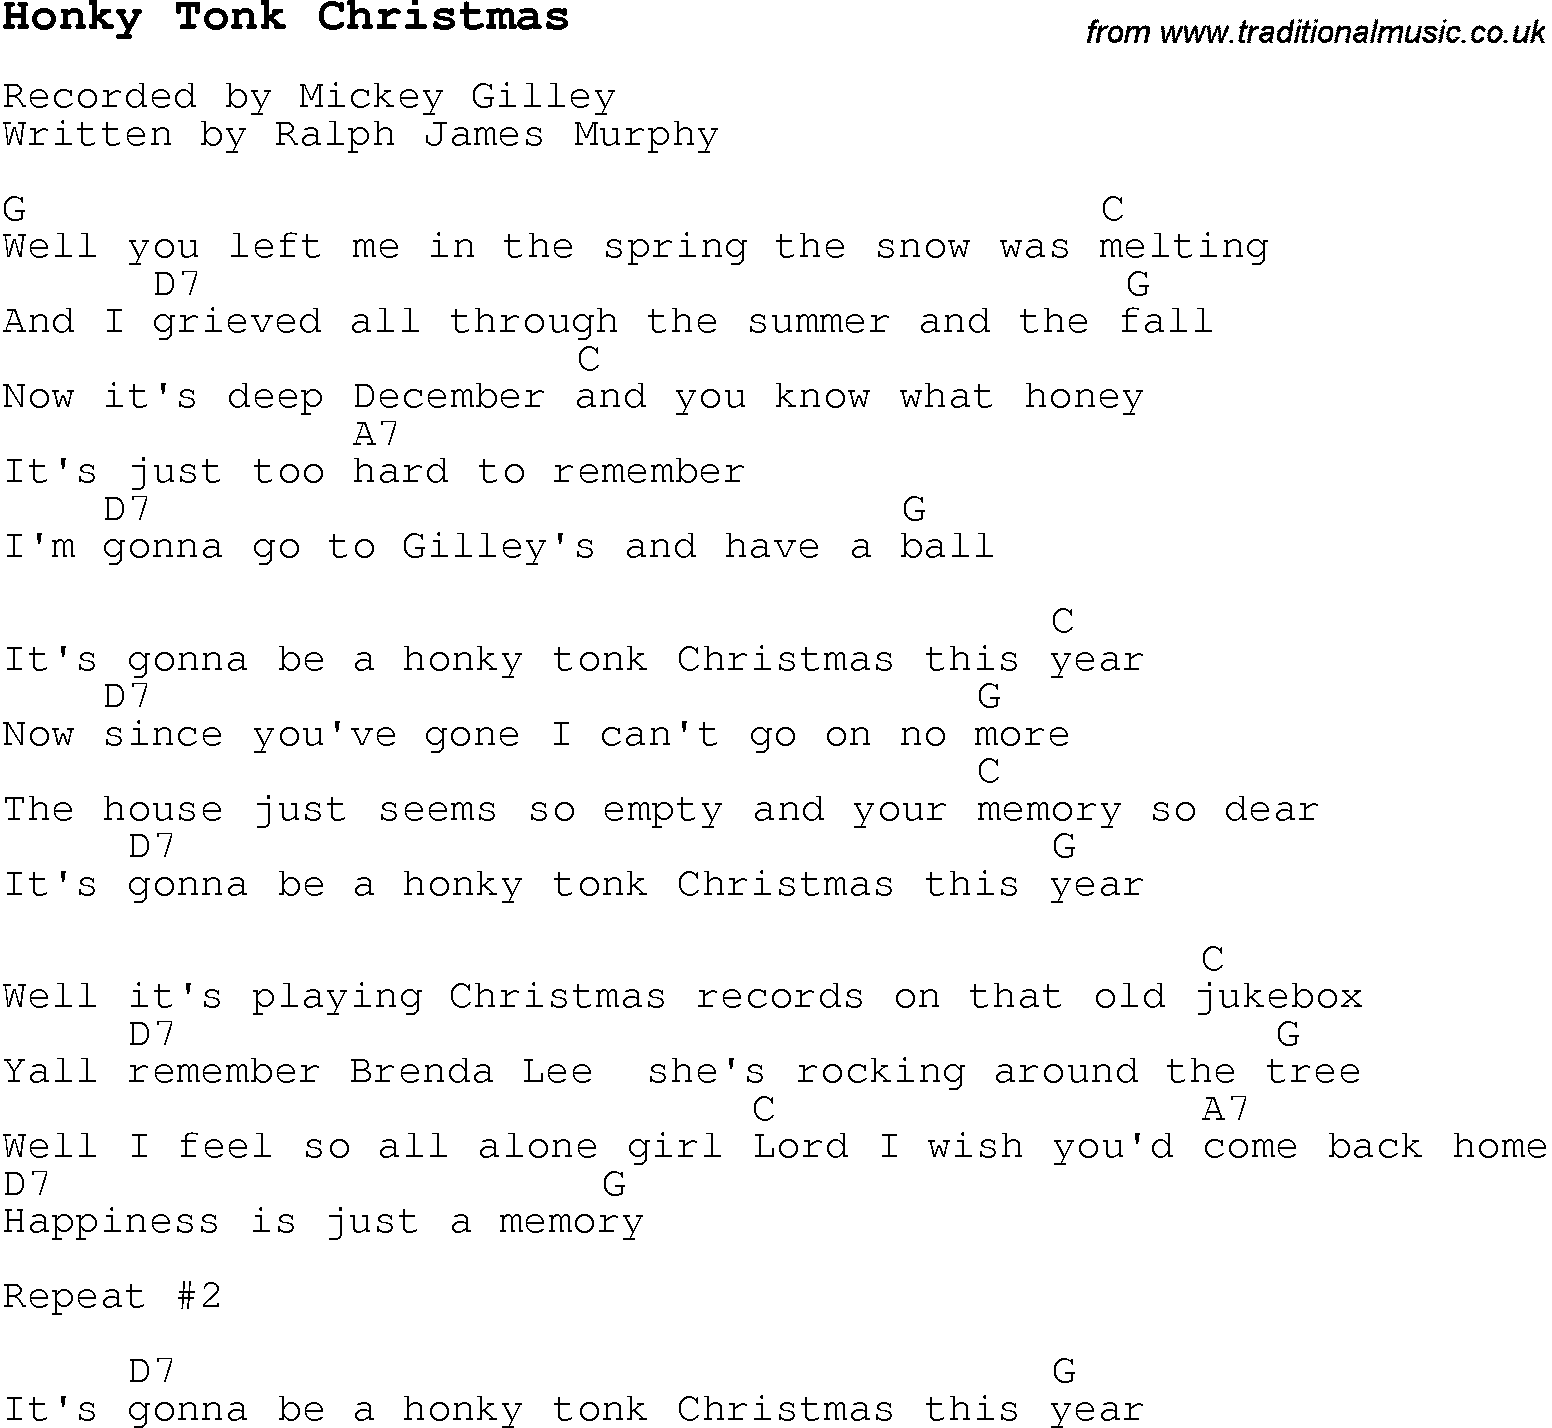 Christmas Songs and Carols, lyrics with chords for guitar banjo for Honky Tonk Christmas